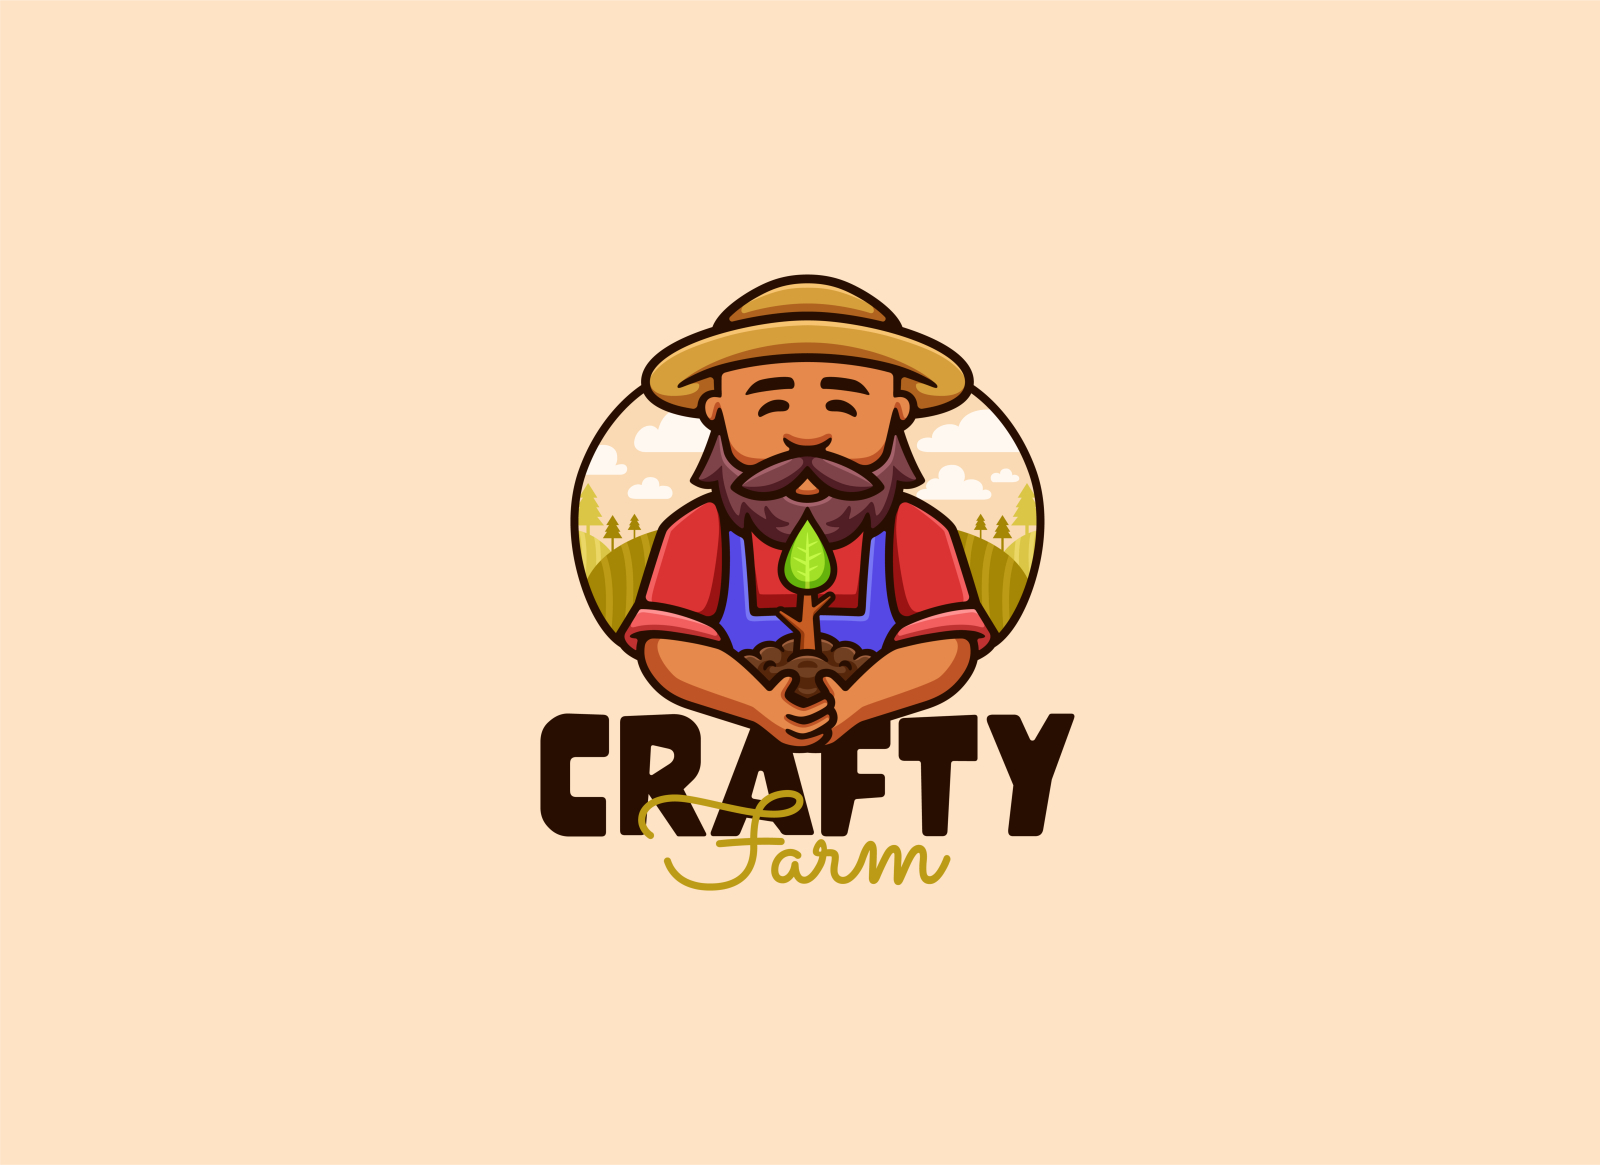 Farmer Cartoon mascot logo design by Vectory on Dribbble